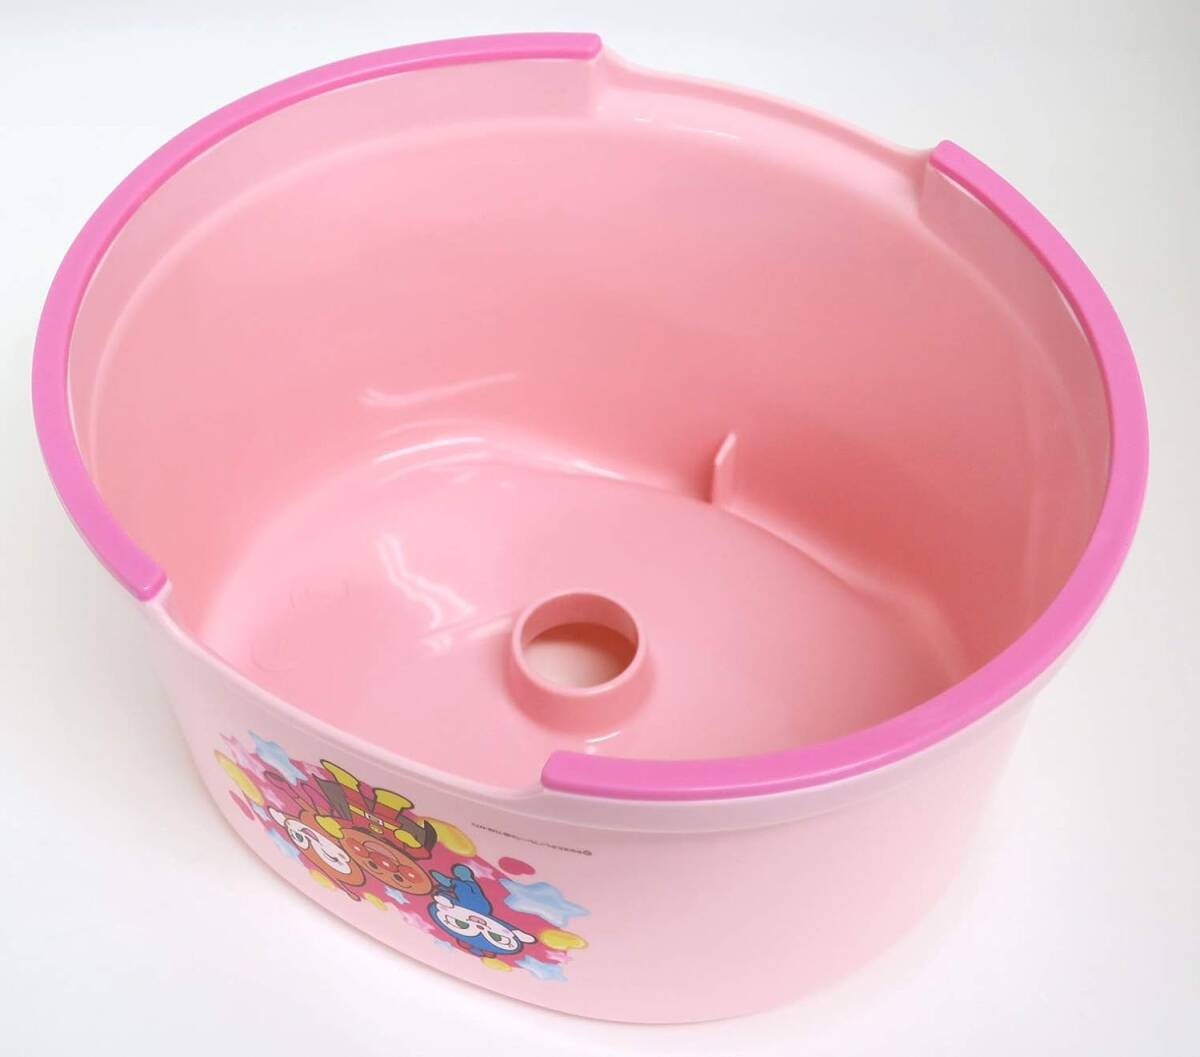 OSK(オーエスケー) バスチェア アンパンマン 風呂いす ピンク 日本製 足ゴム付 おしゃれ かわいい 滑りにくい B-の画像4